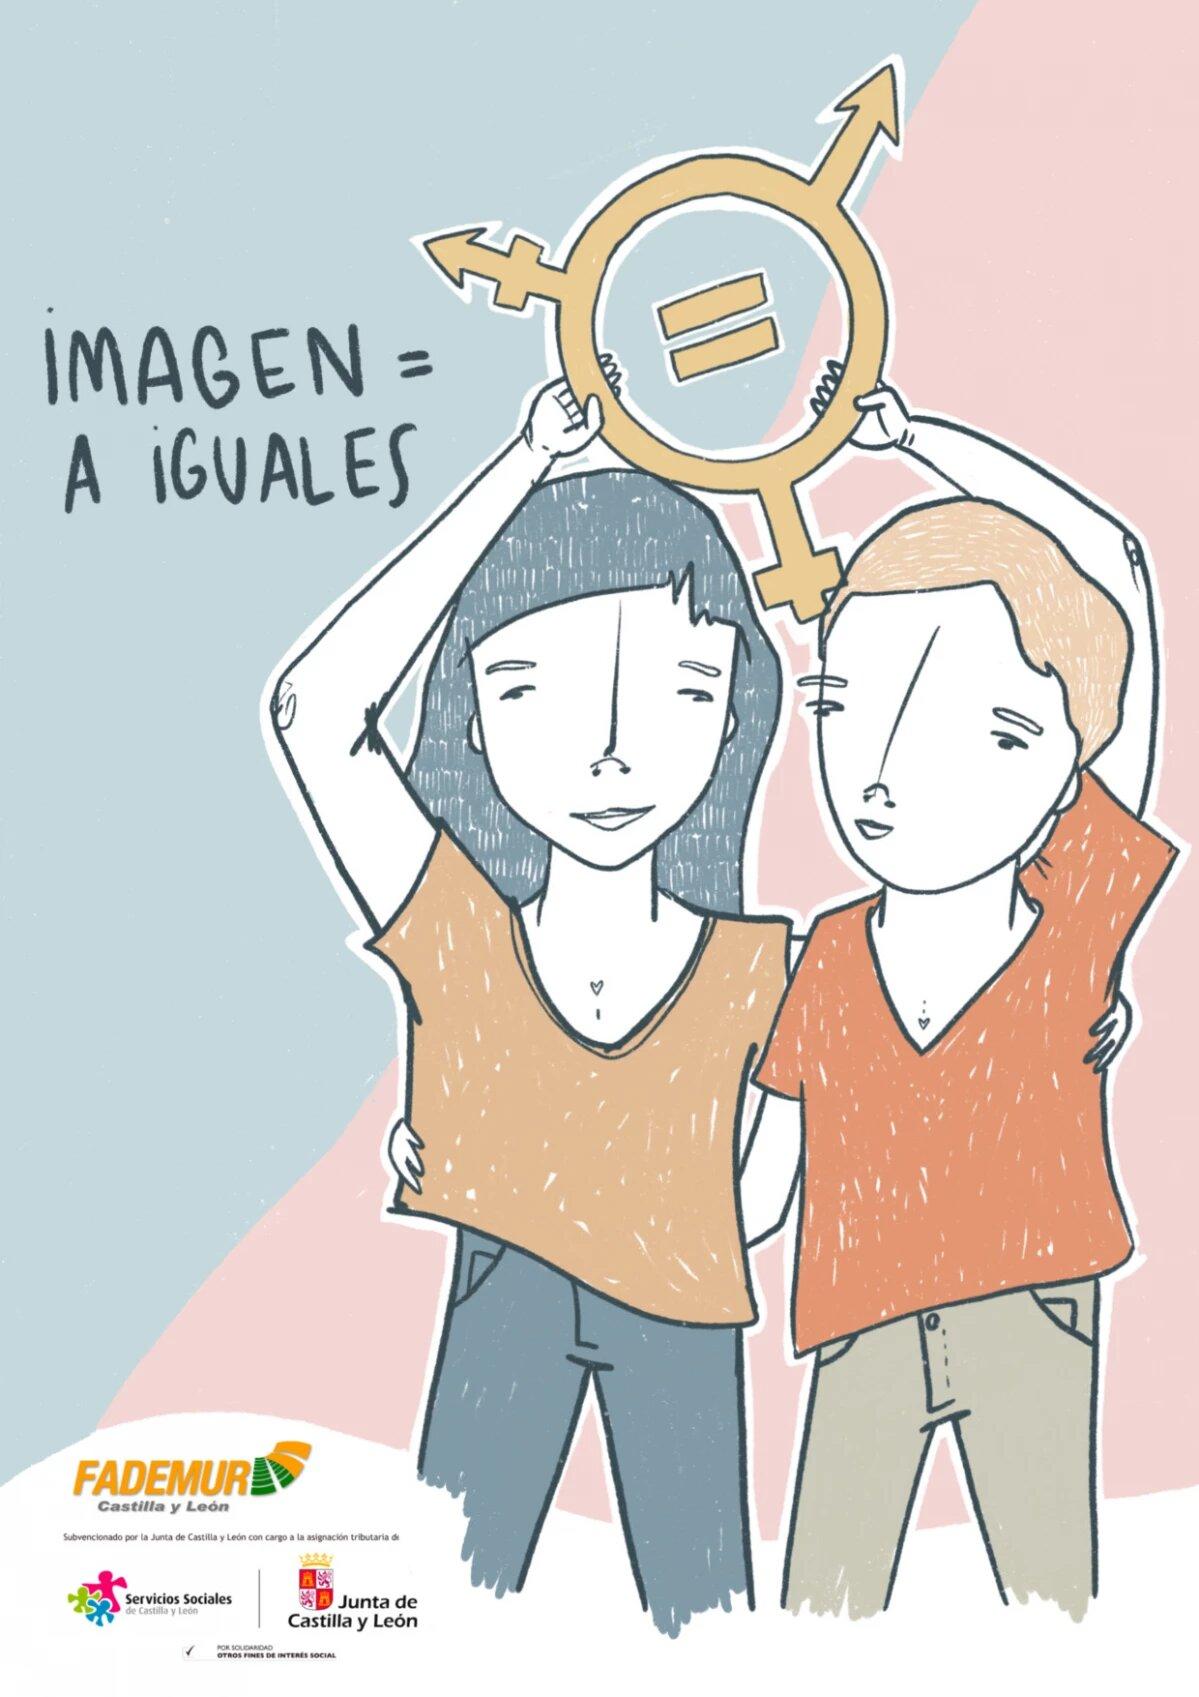 Imagen= a iguales0